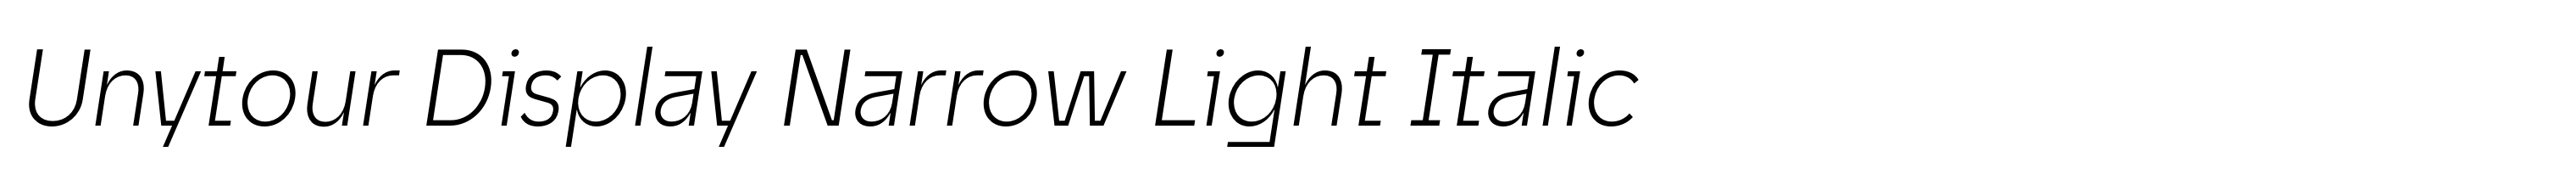 Unytour Display Narrow Light Italic